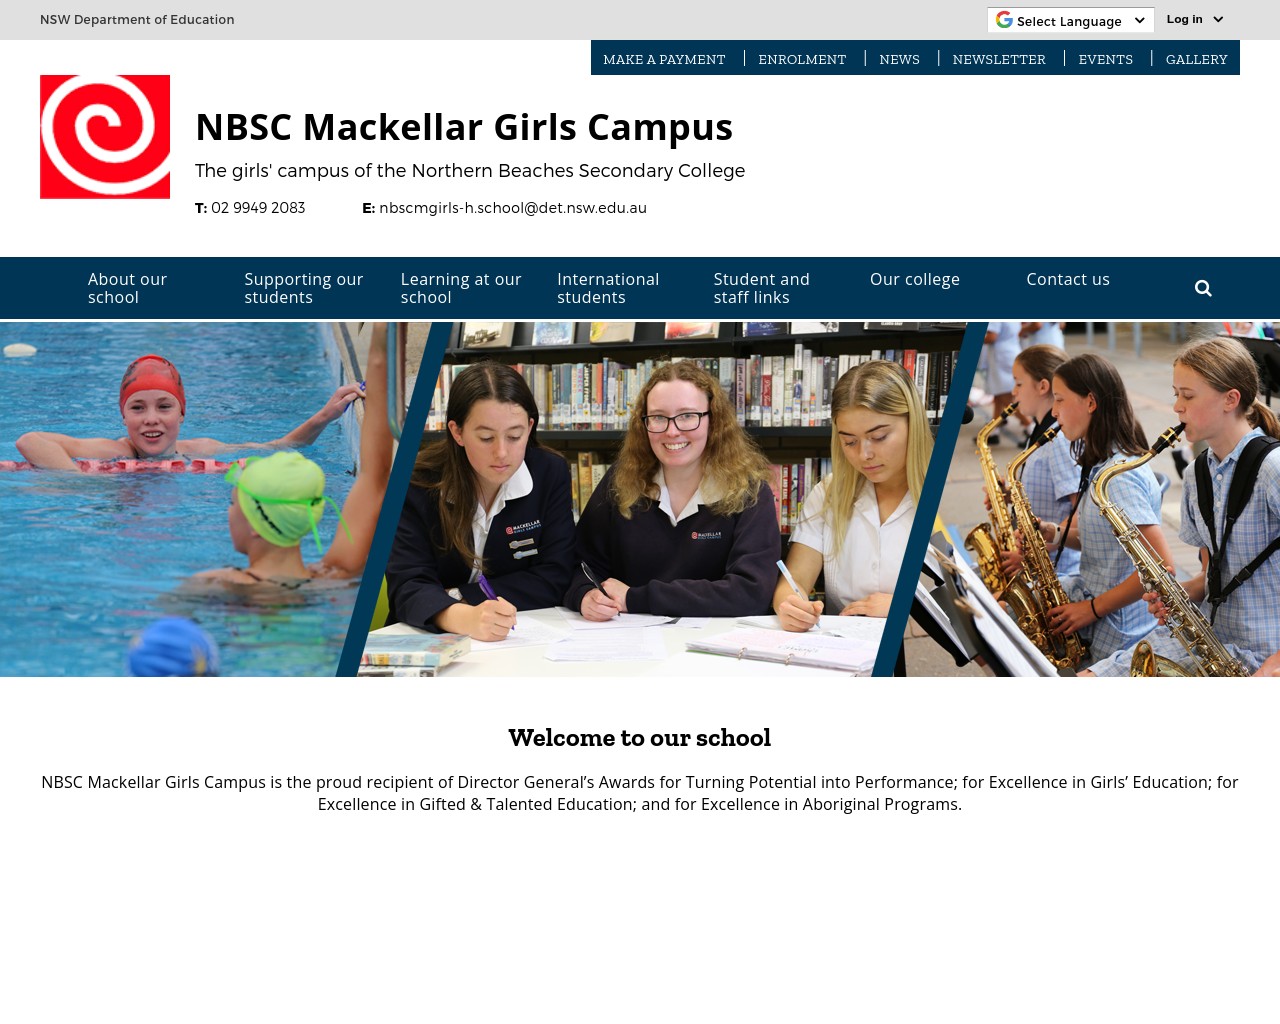 NBSC Mackellar Girls Campus